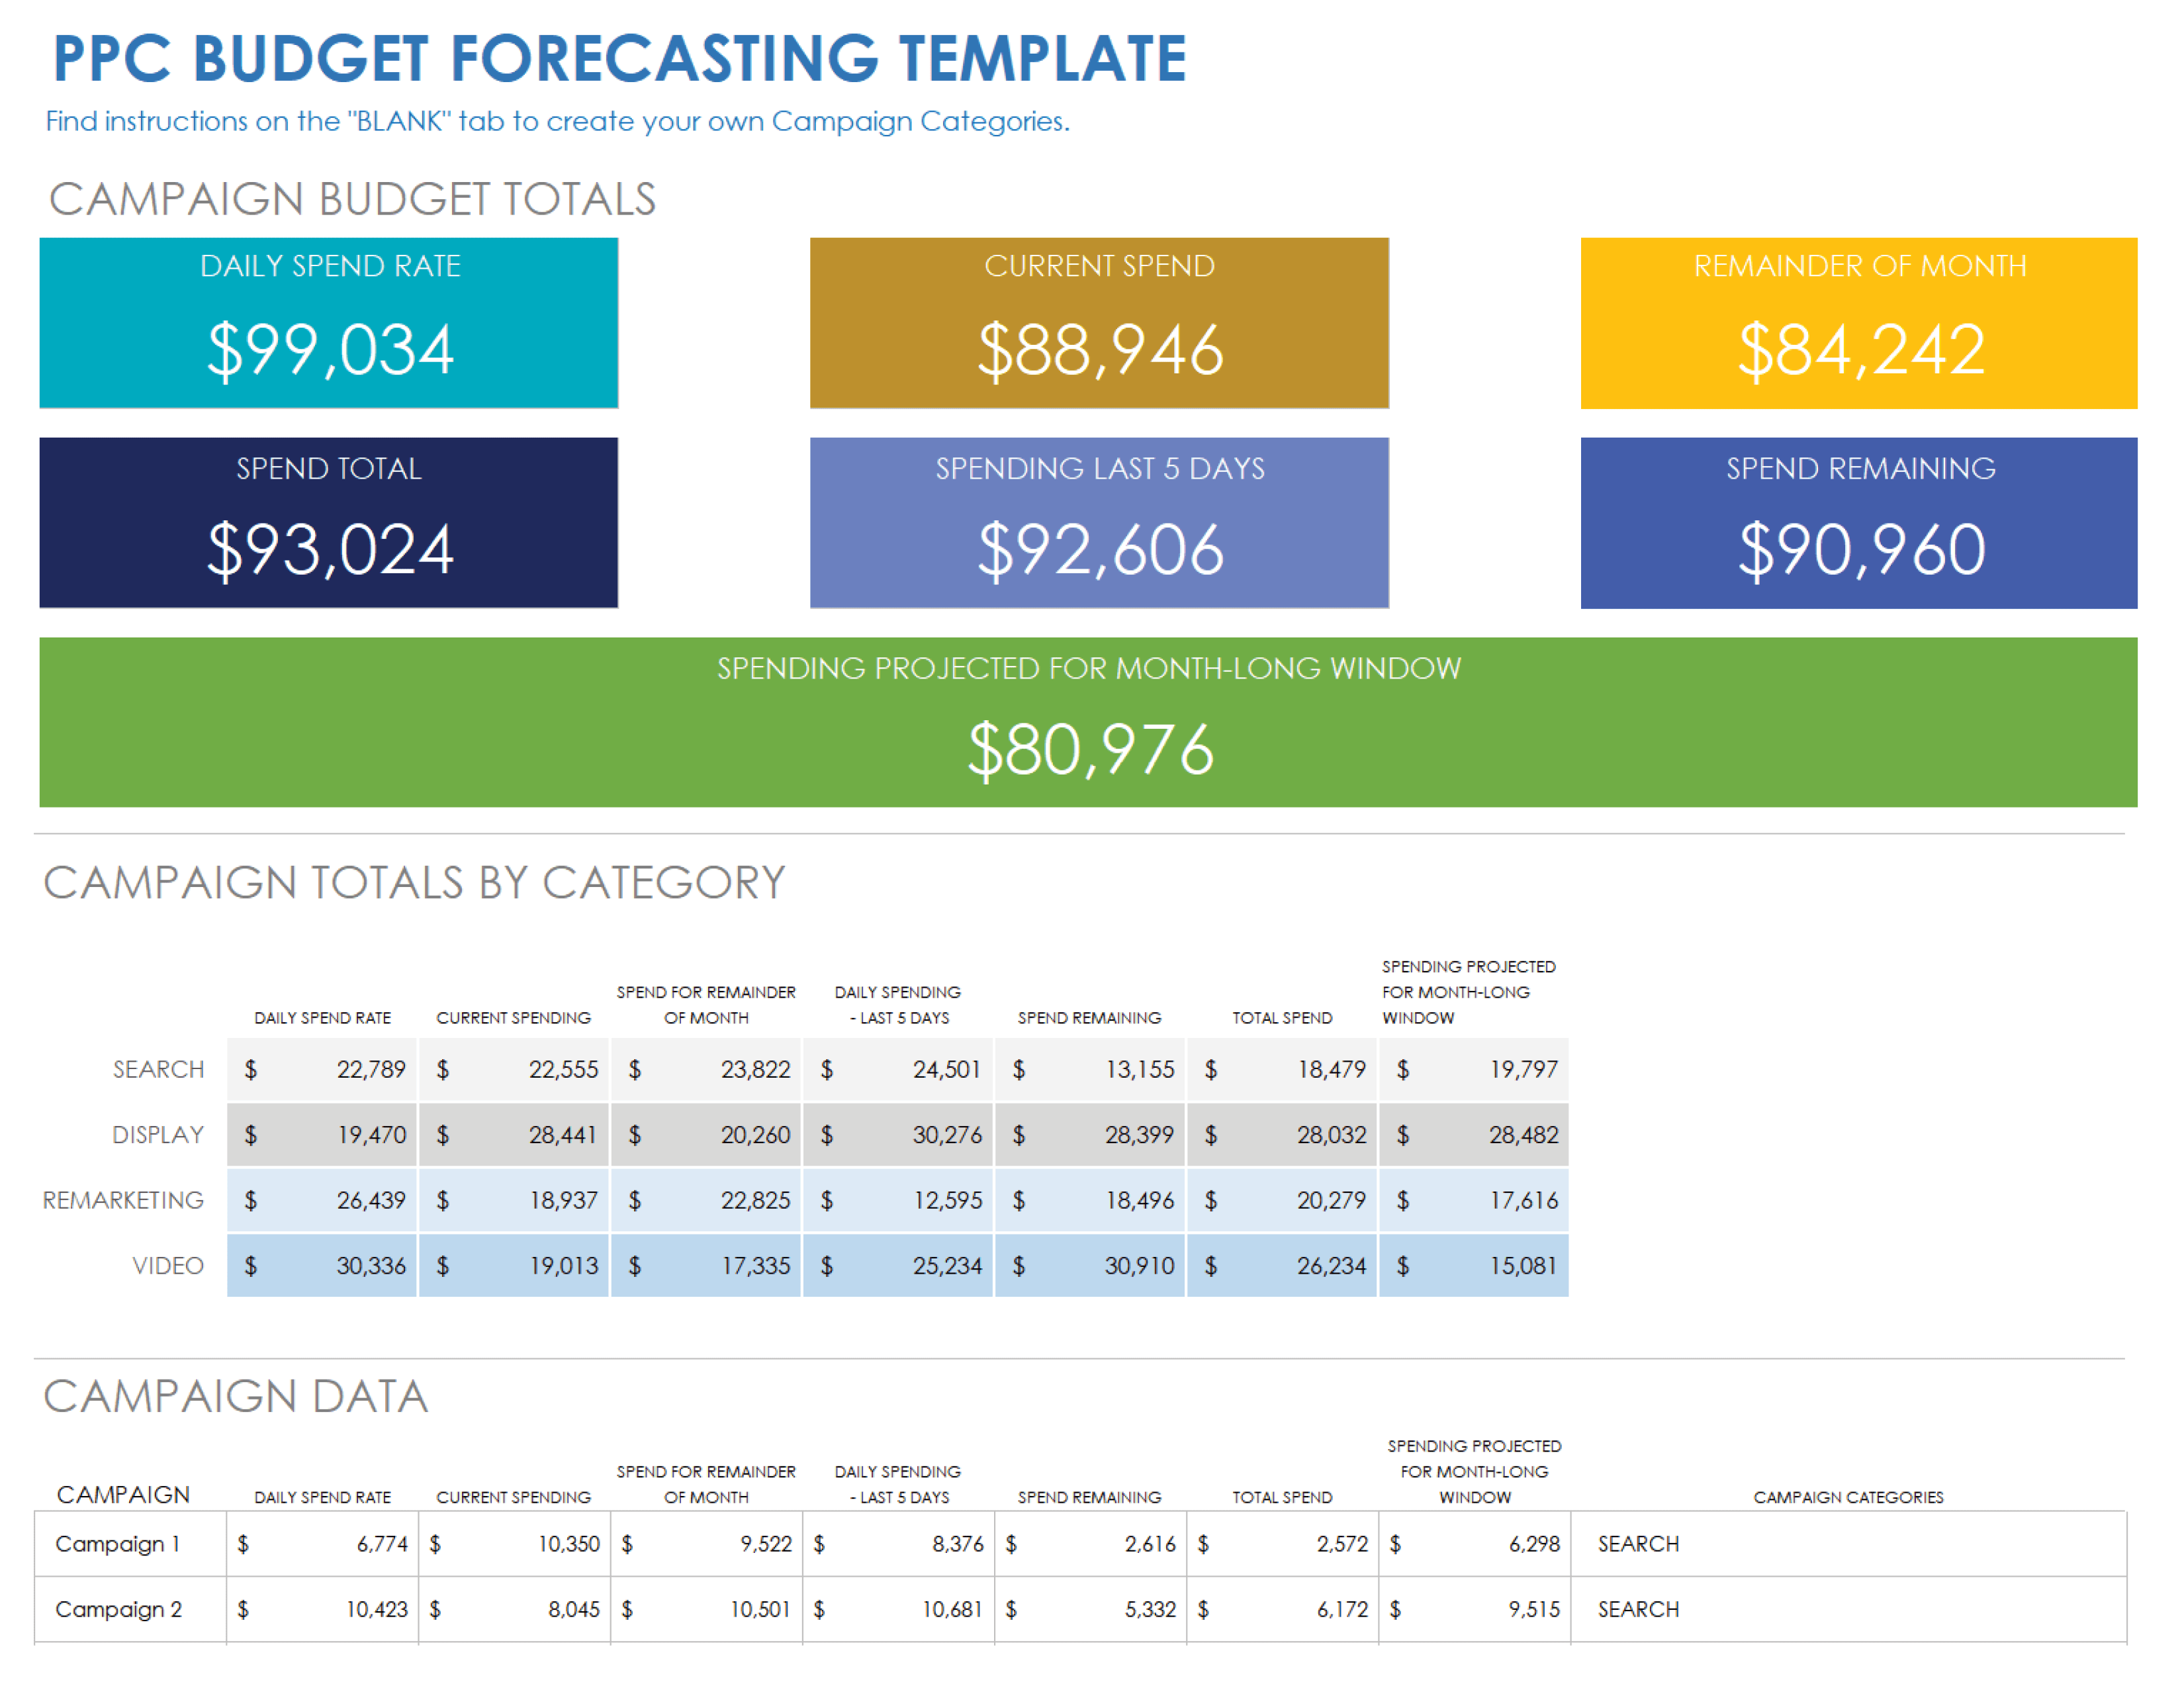 PPC Budget Forecasting Template